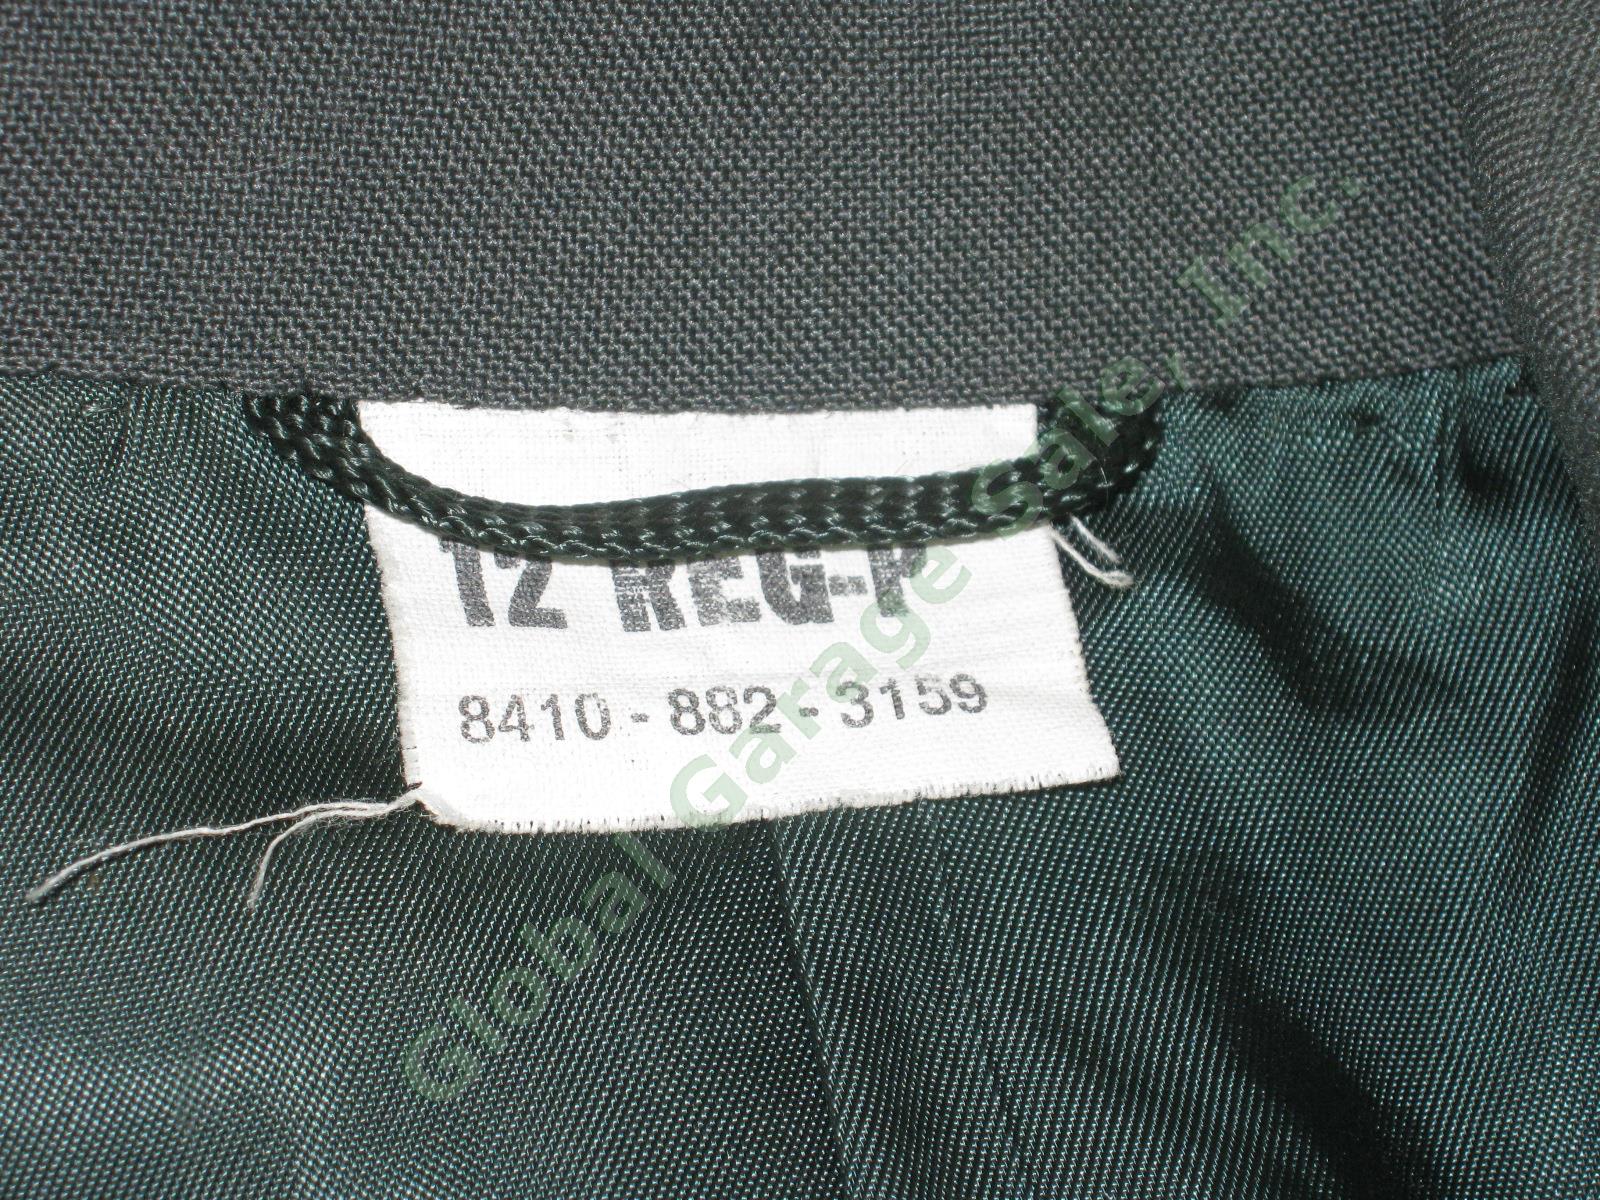 Vtg Womens Army Corps WAC Uniform Lot Green Cord Skirt Jacket Cap AG-344 Dress 6